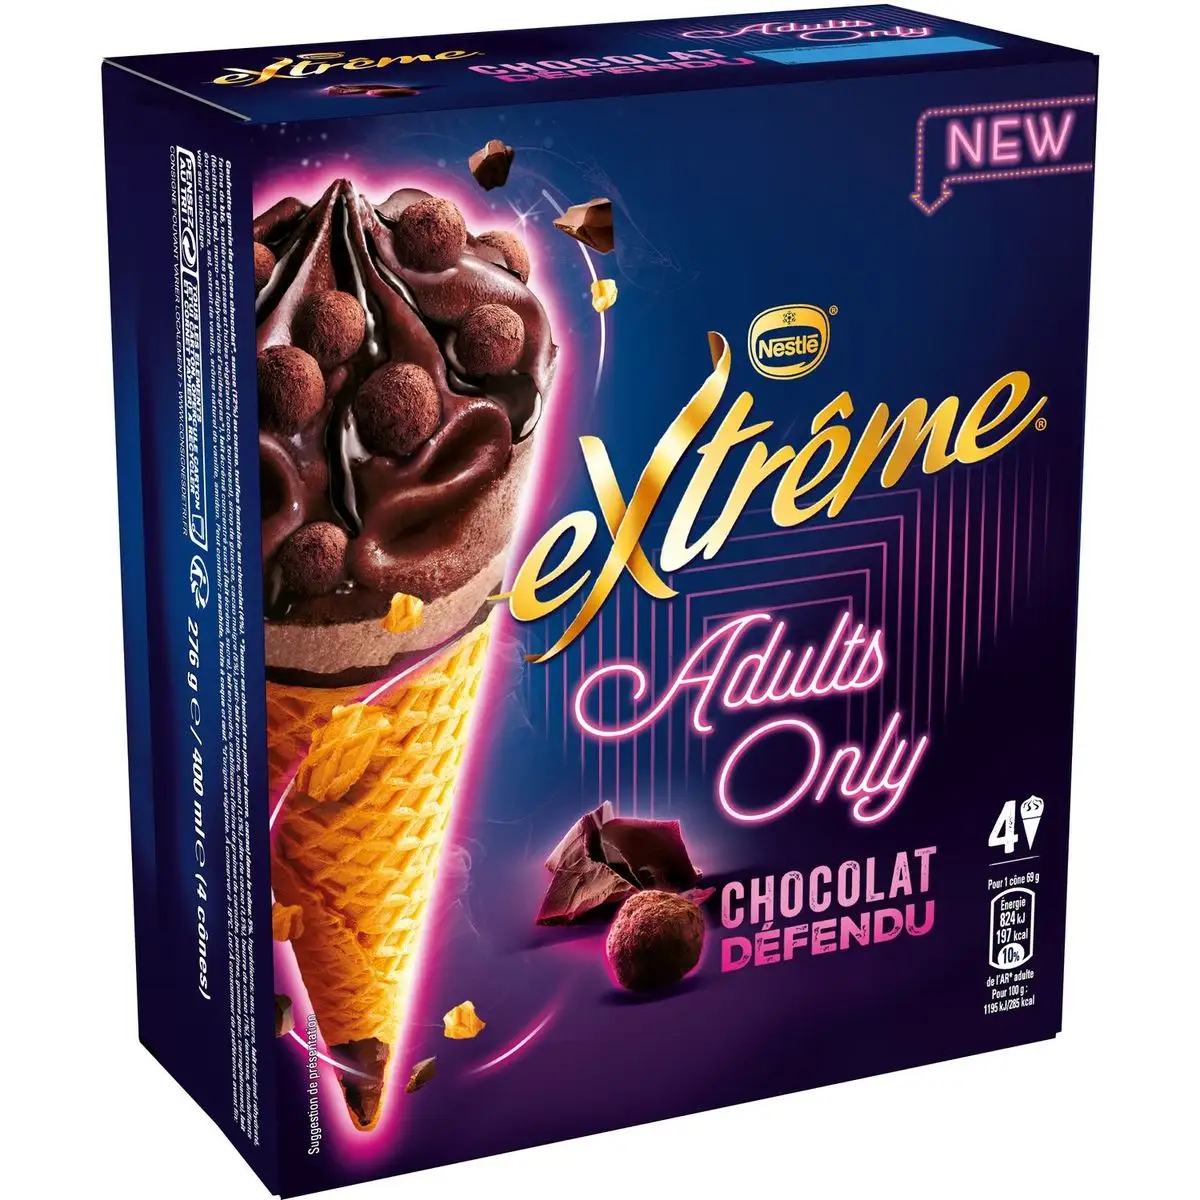 Nestlé Extreme Smooth nocciola con cremoso vaniglia/nestlé Extreme ice-cream cone su Behance